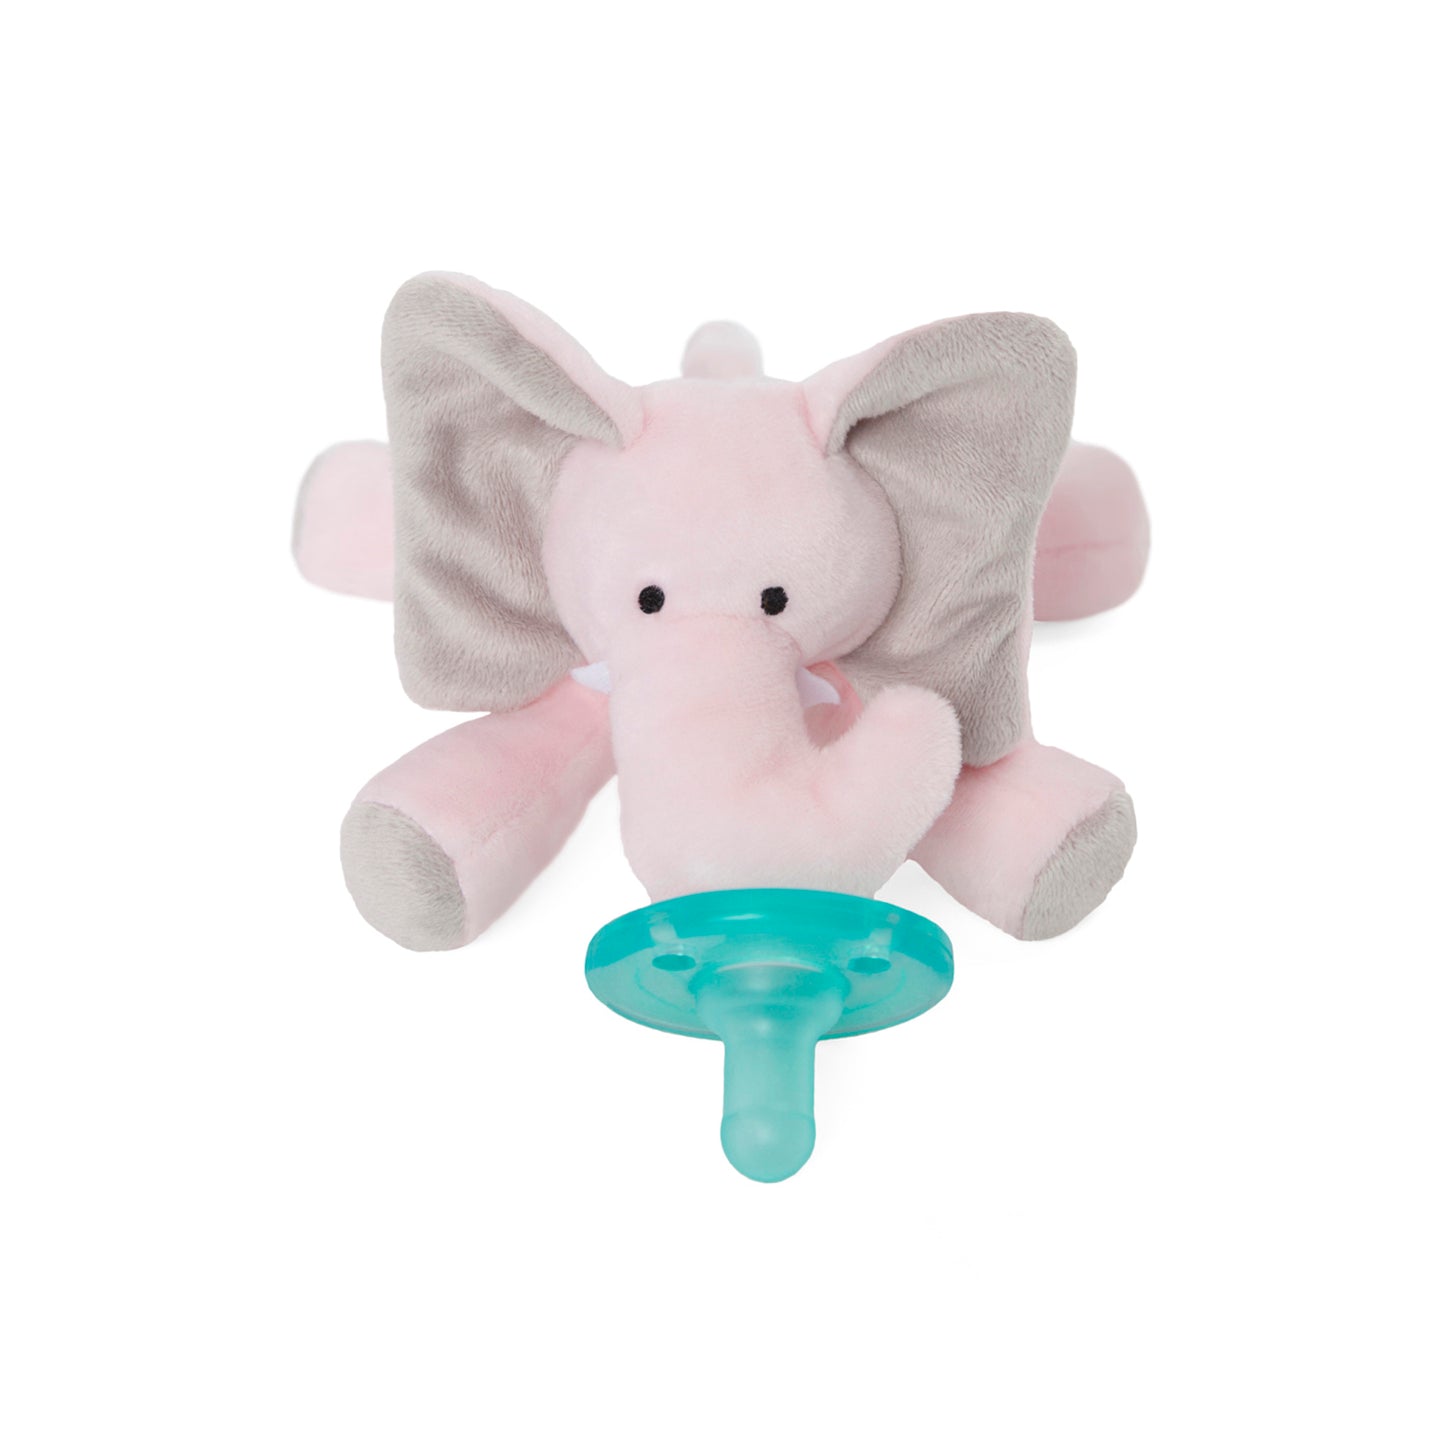 Wubbanub Infant Pacifier - Pink Elephant